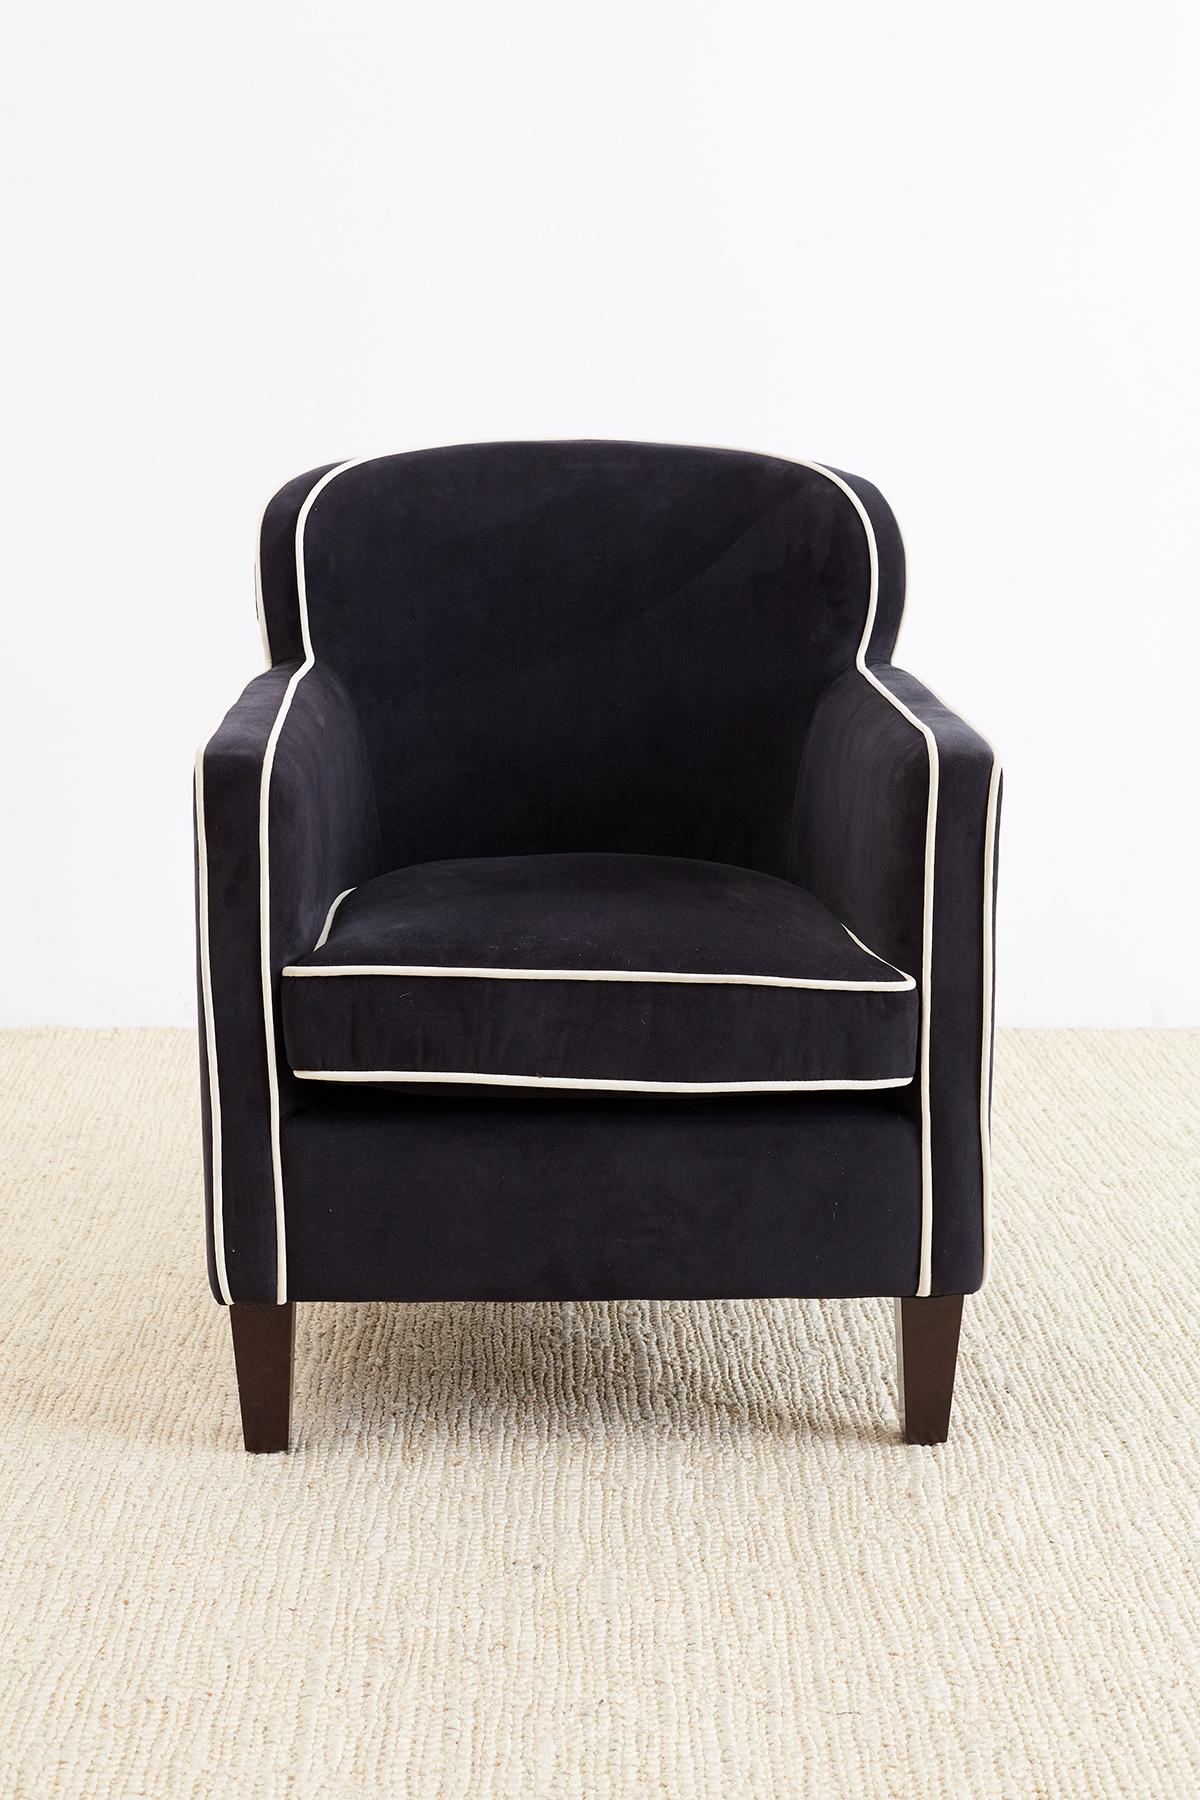 American Pair of Art Deco Style Velvet Club Chairs